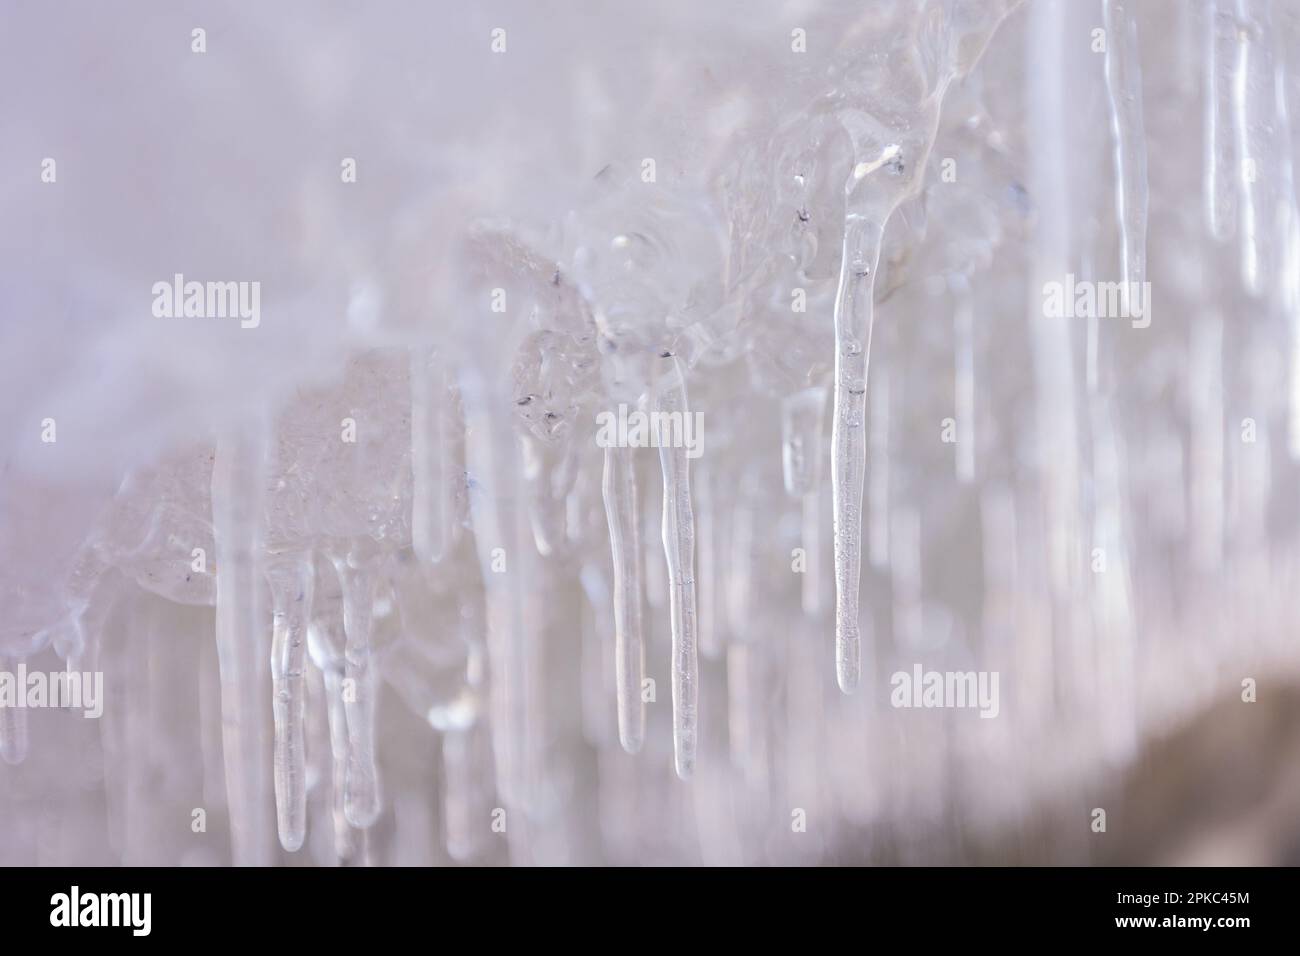 irachiryeva@gmail.com macro photography of small icicles, winter beauty Stock Photo